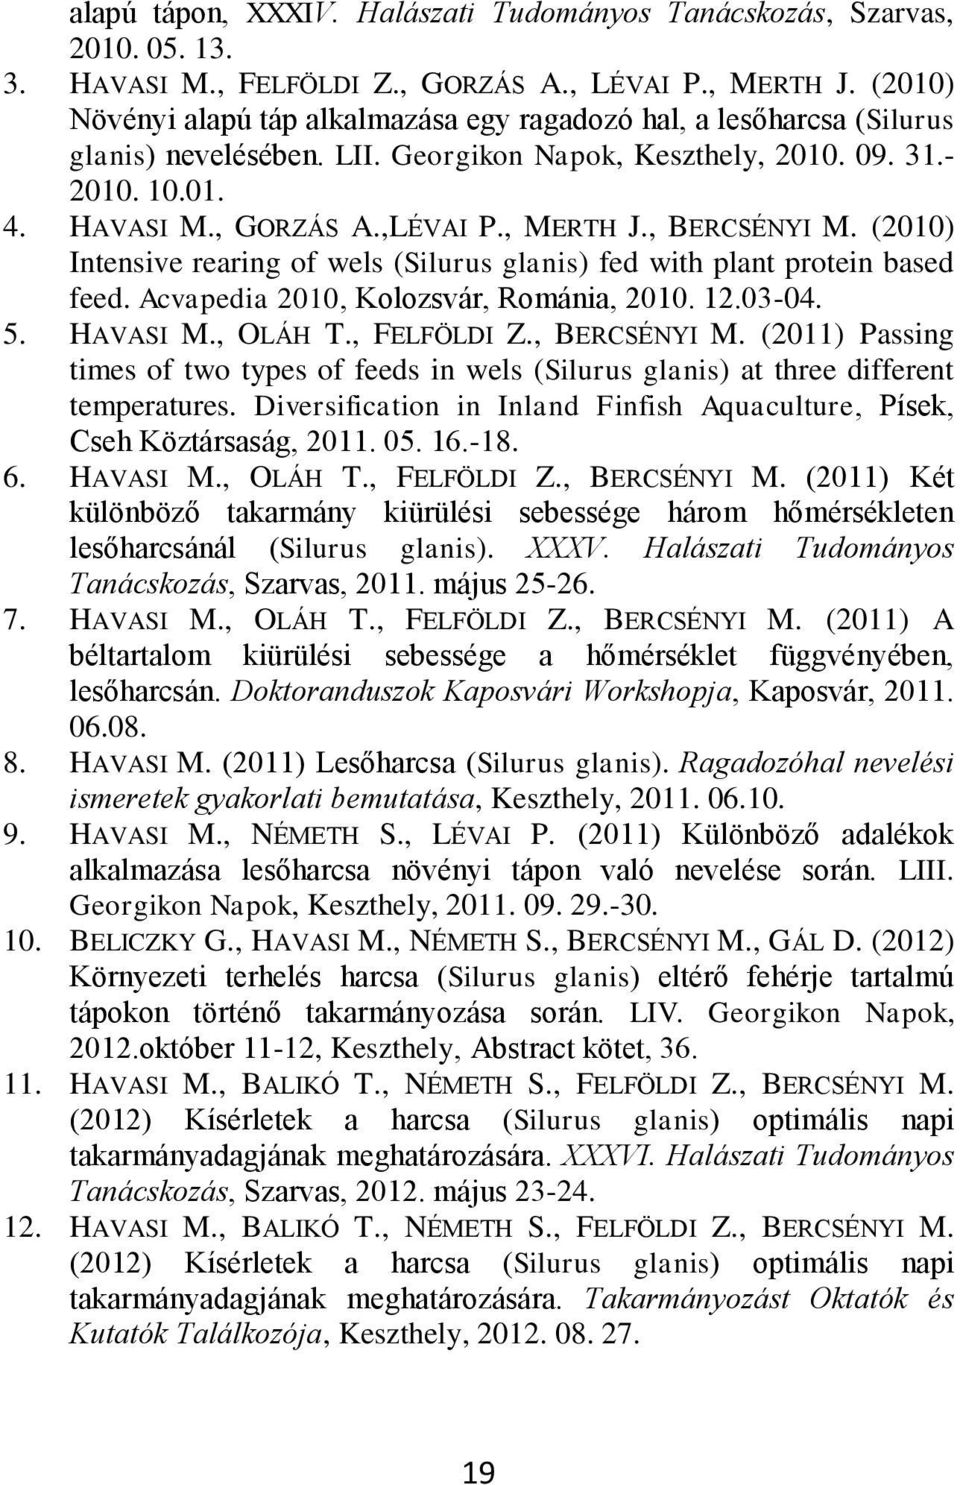 (2010) Intensive rering of wels (Silurus glnis) fed with plnt protein sed feed. Acvpedi 2010, Kolozsvár, Románi, 2010. 12.03-04. 5. HAVASI M., OLÁH T., FELFÖLDI Z., BERCSÉNYI M.